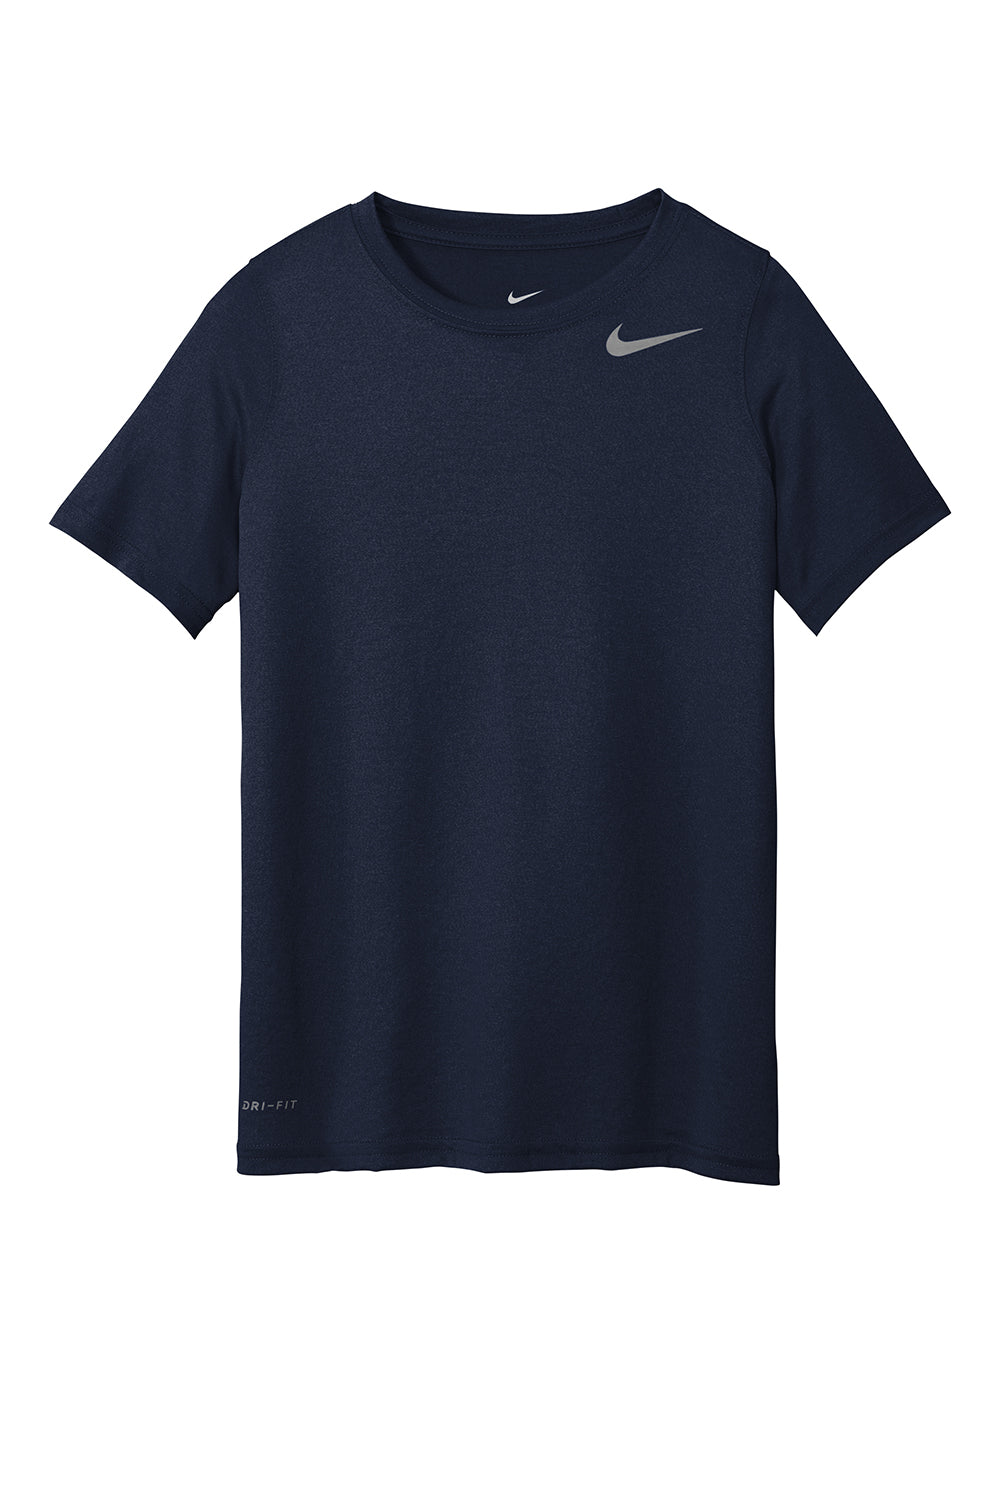 Nike DV7317 Youth Team rLegend Dri-Fit Moisure Wicking Short Sleeve Crewneck T-Shirt College Navy Blue Flat Front